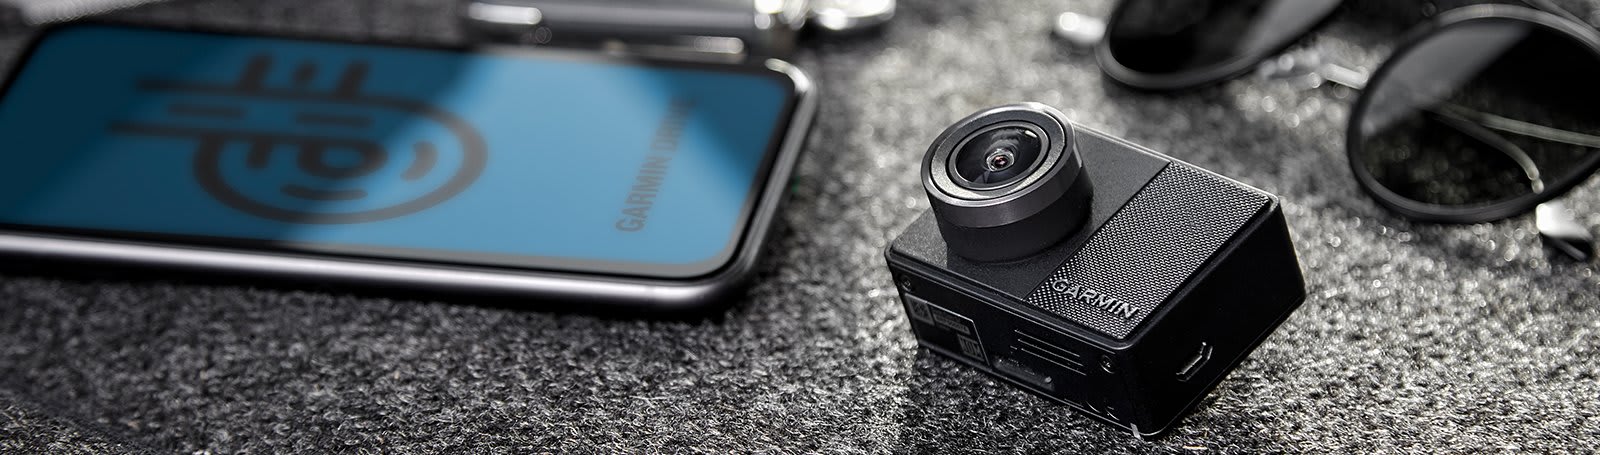 Garmin Dash Cam™ 57  Caméra embarquée pour voiture